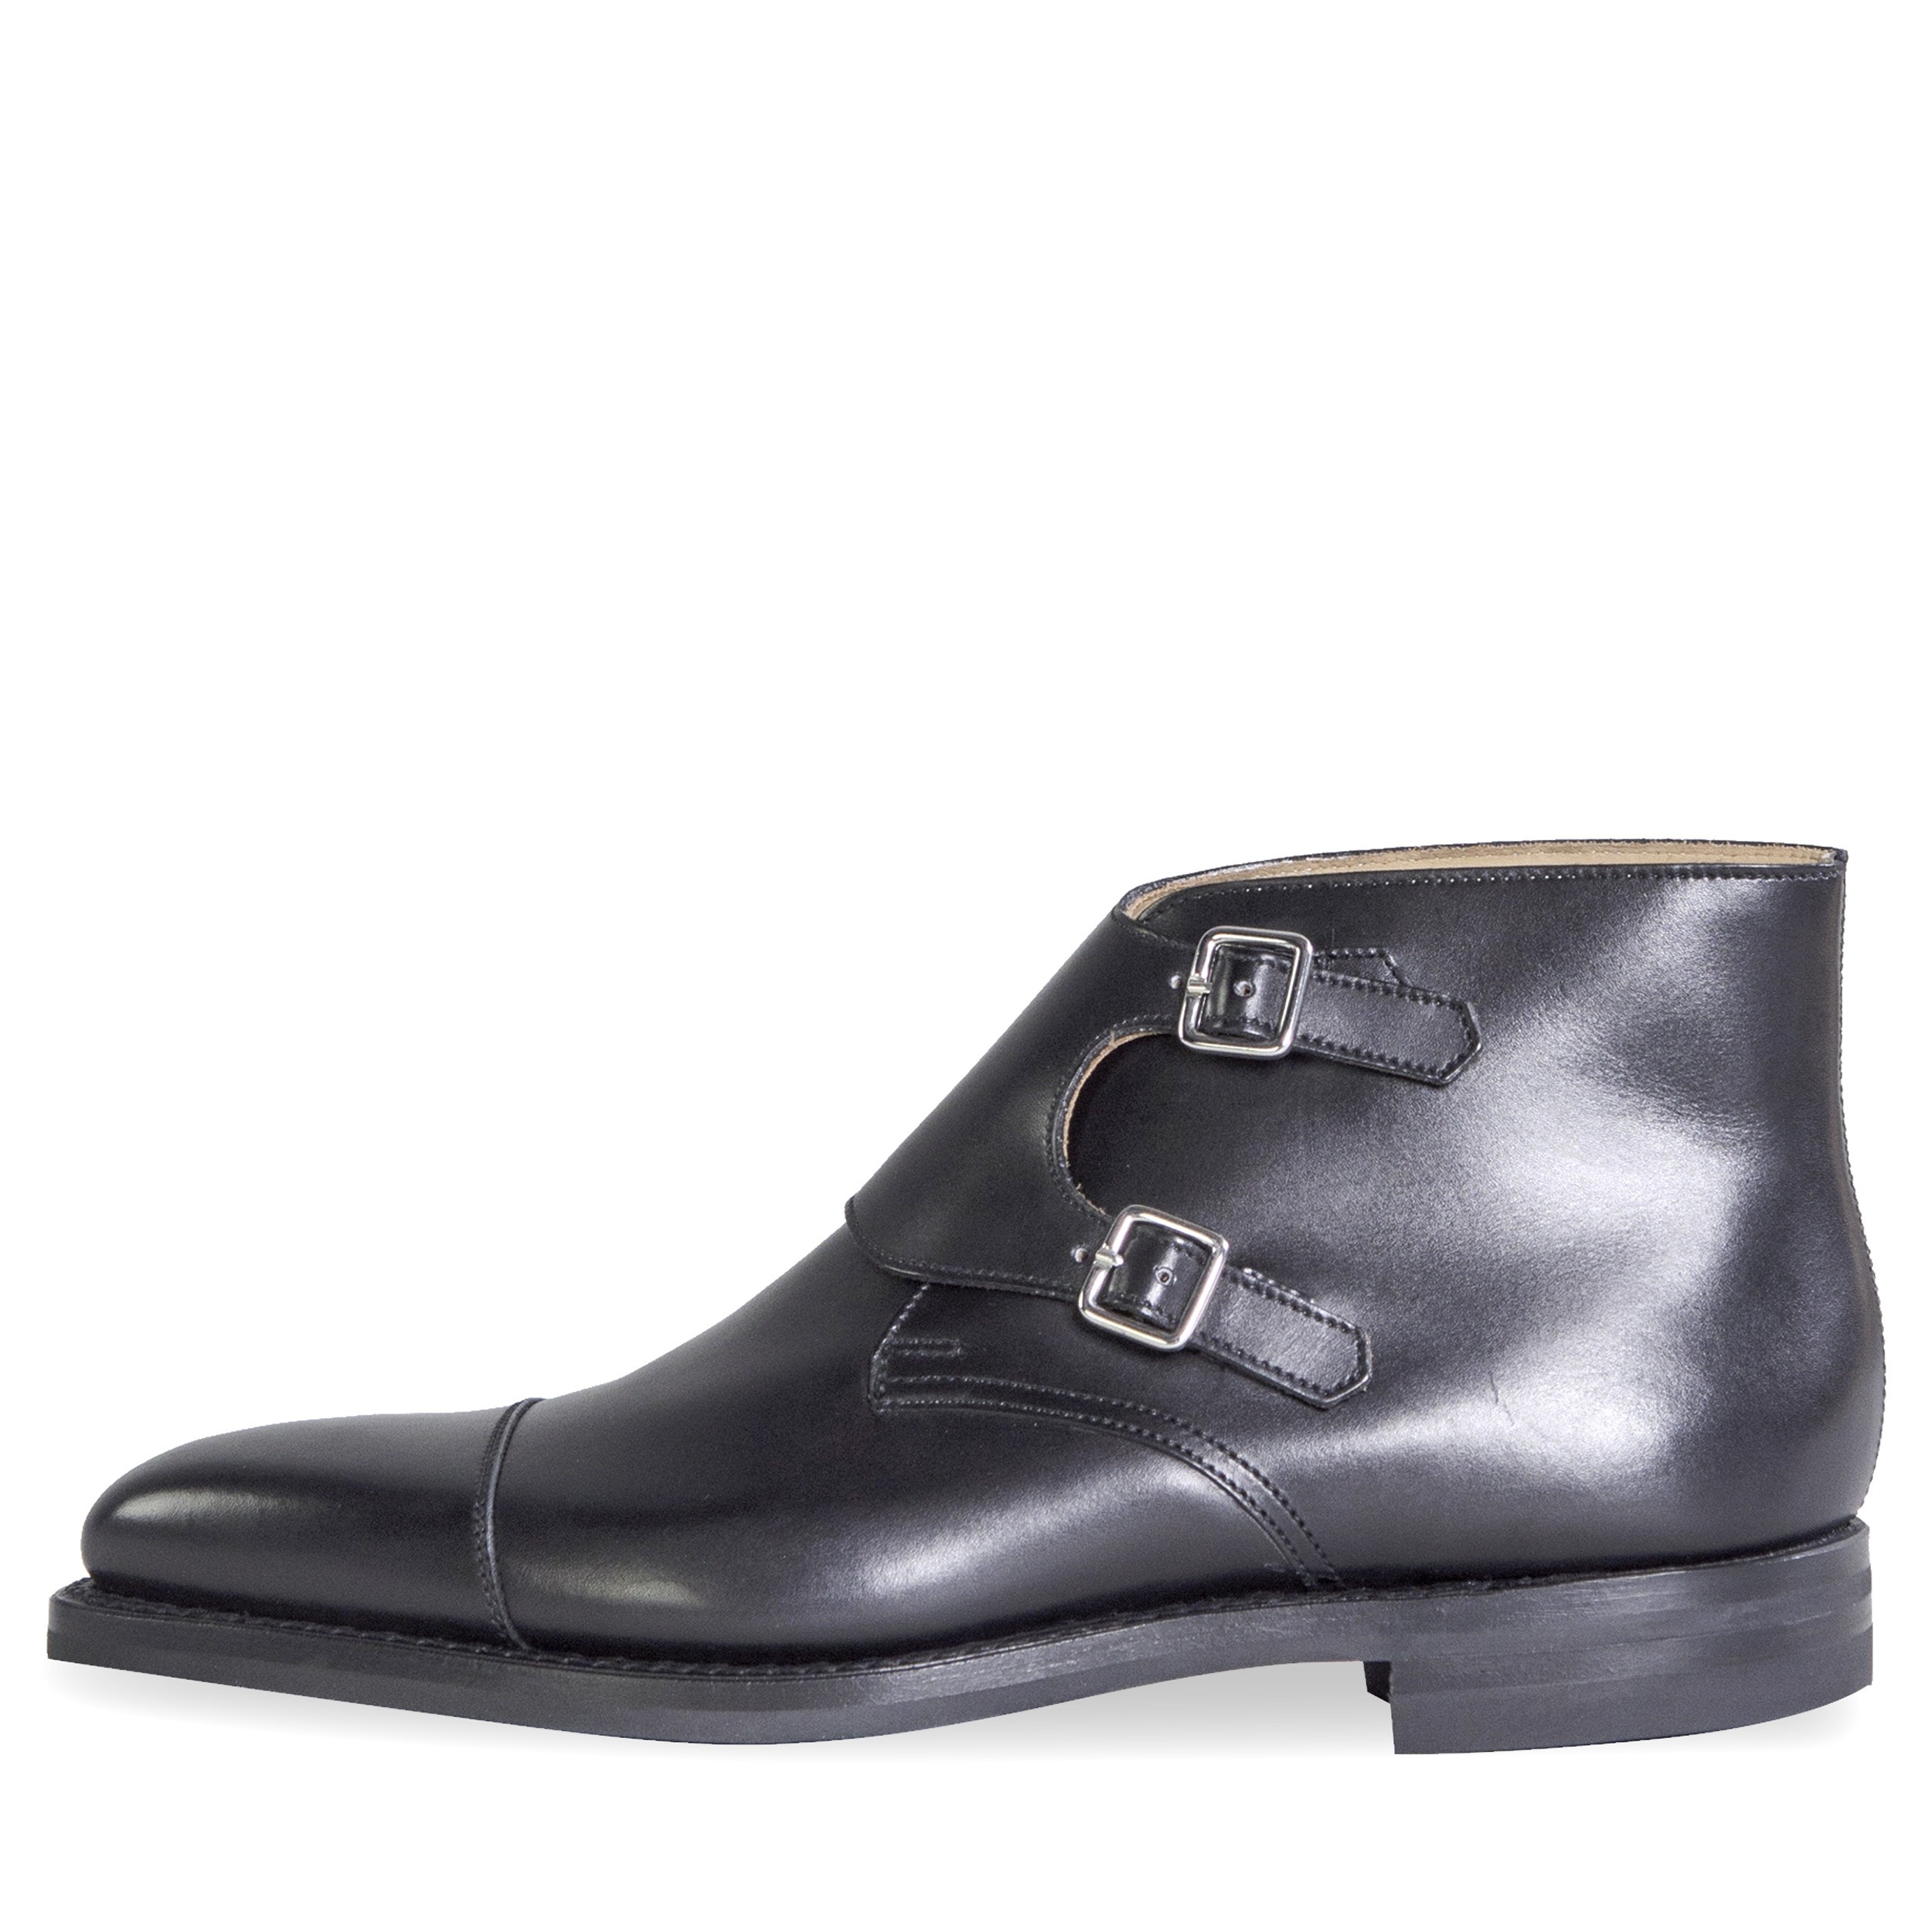 Crockett & Jones ’Camberley’ Calf Leather Boots Black